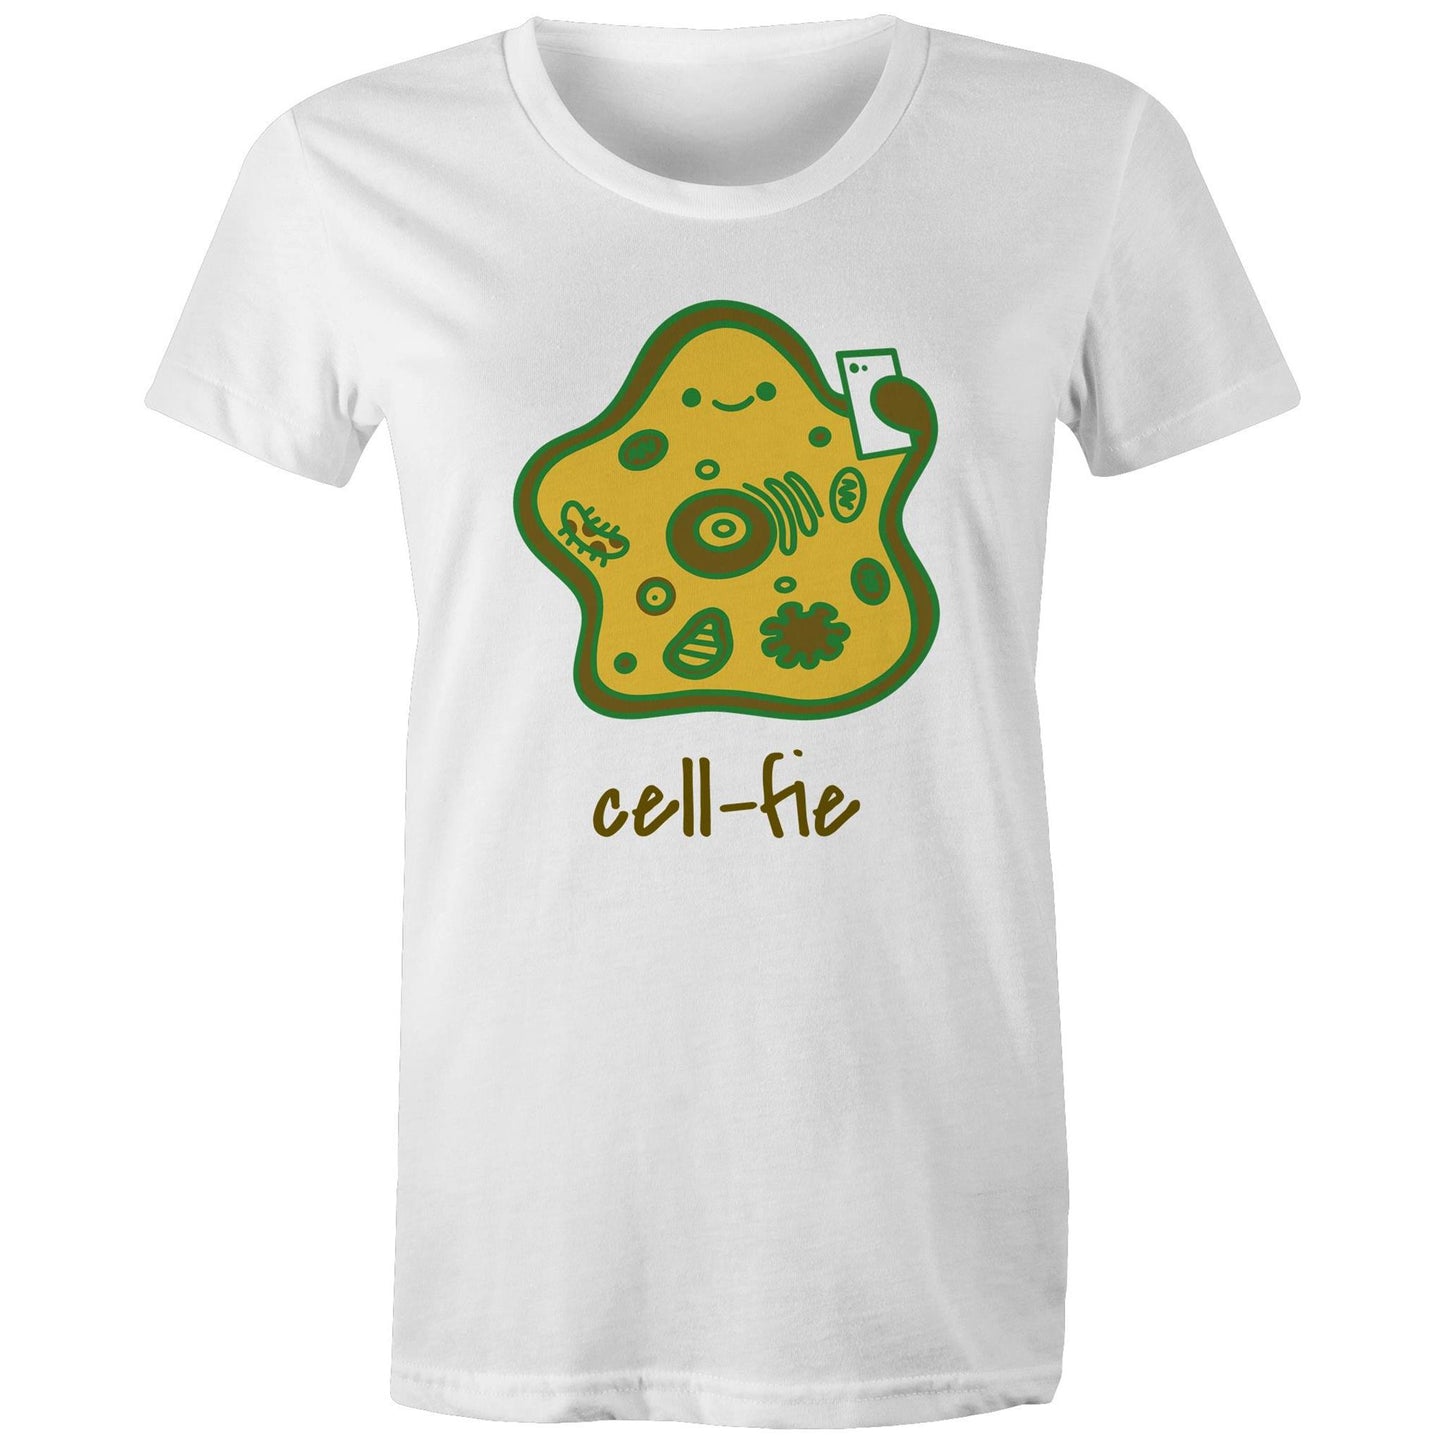 Cell-fie - Womens T-shirt White Womens T-shirt Science